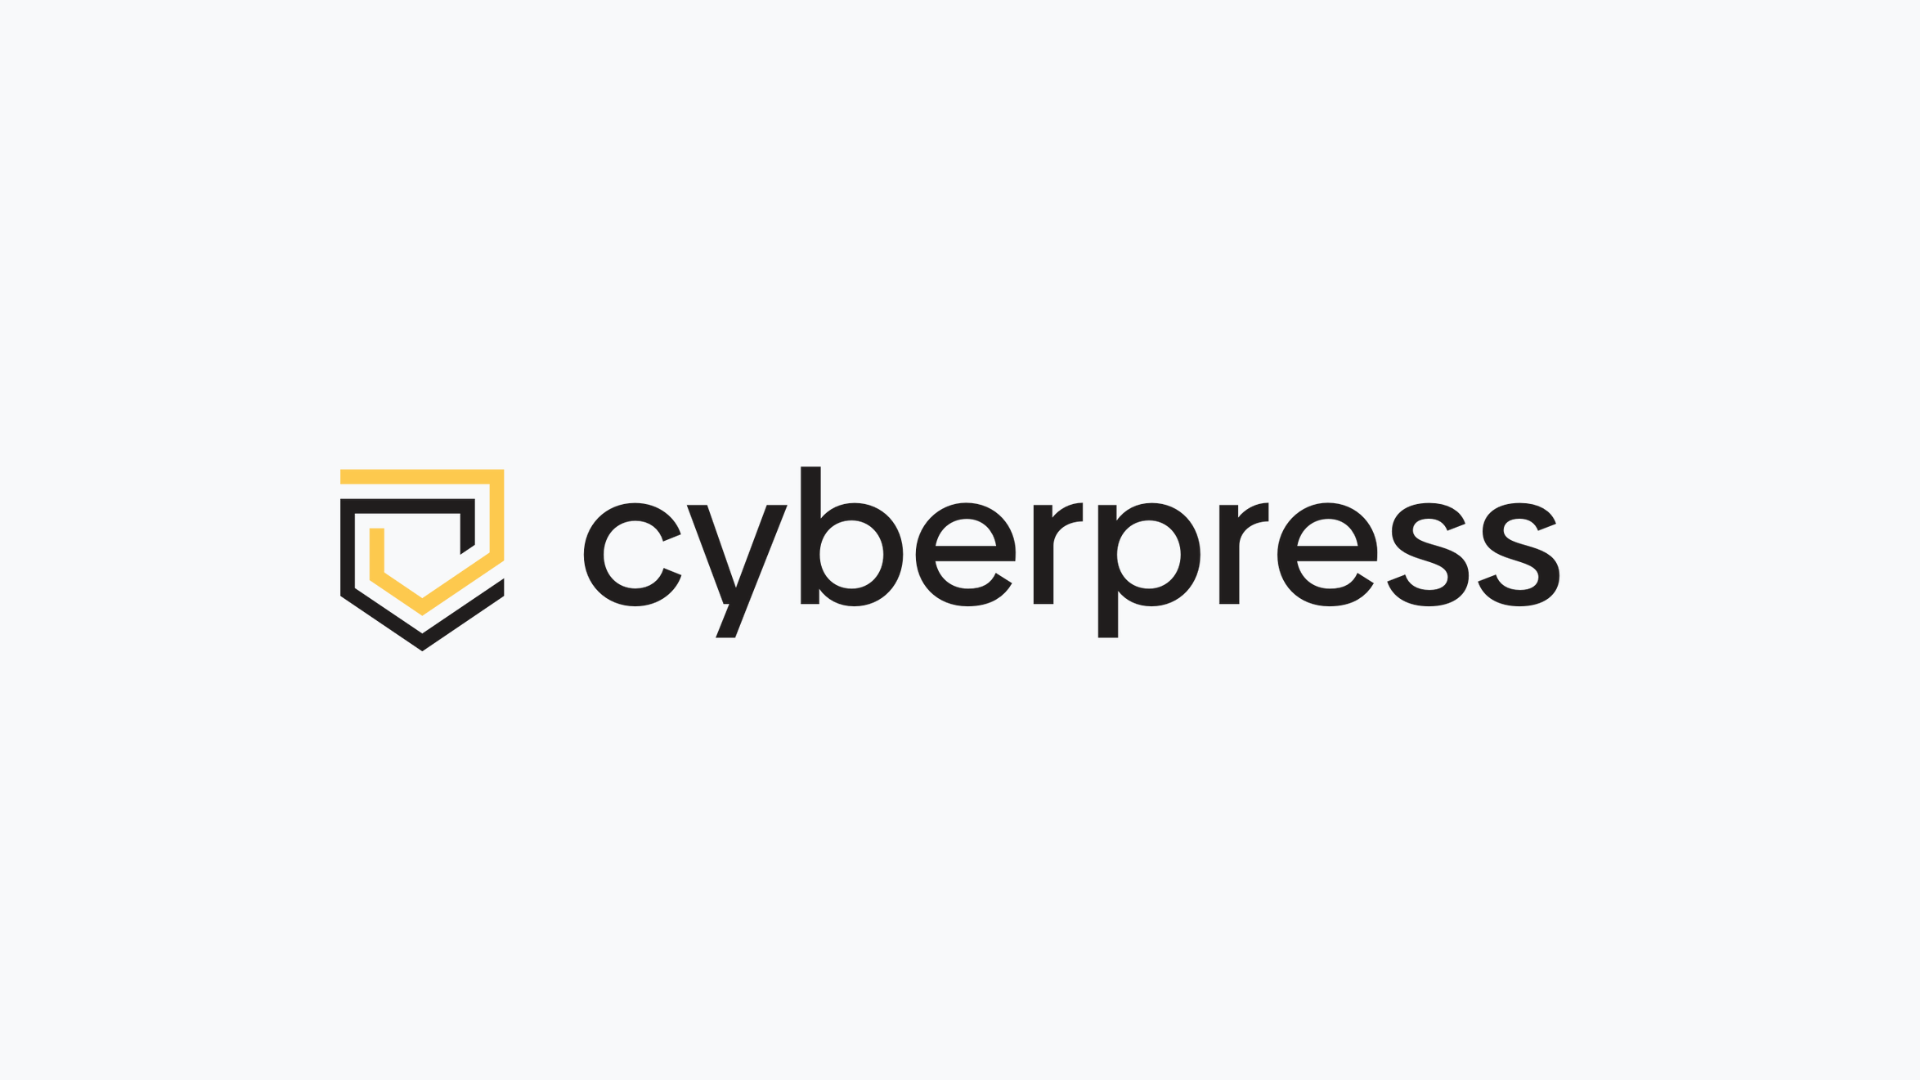 Cyberpress Launches Cybersecurity Press Release Distribution Platform